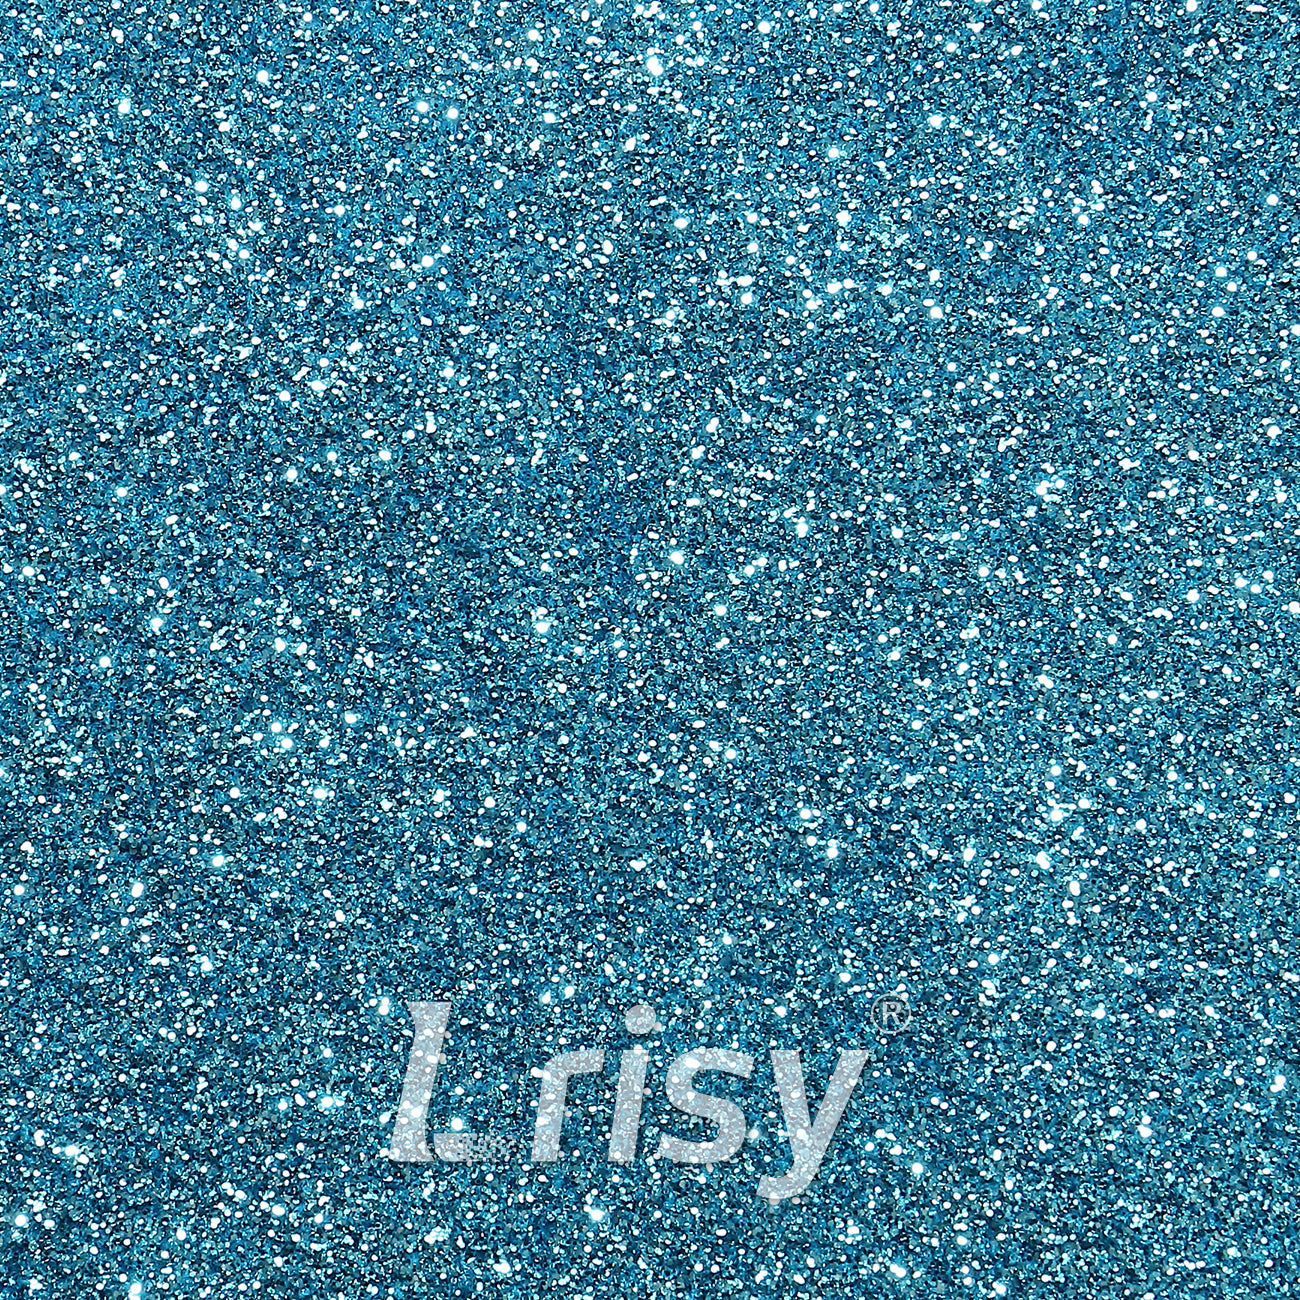 Lrisy Extra Fine Powder Metallic Glitter 140g/4.5oz with Shaker Lid(Extra Thin Sky Blue/B0711)